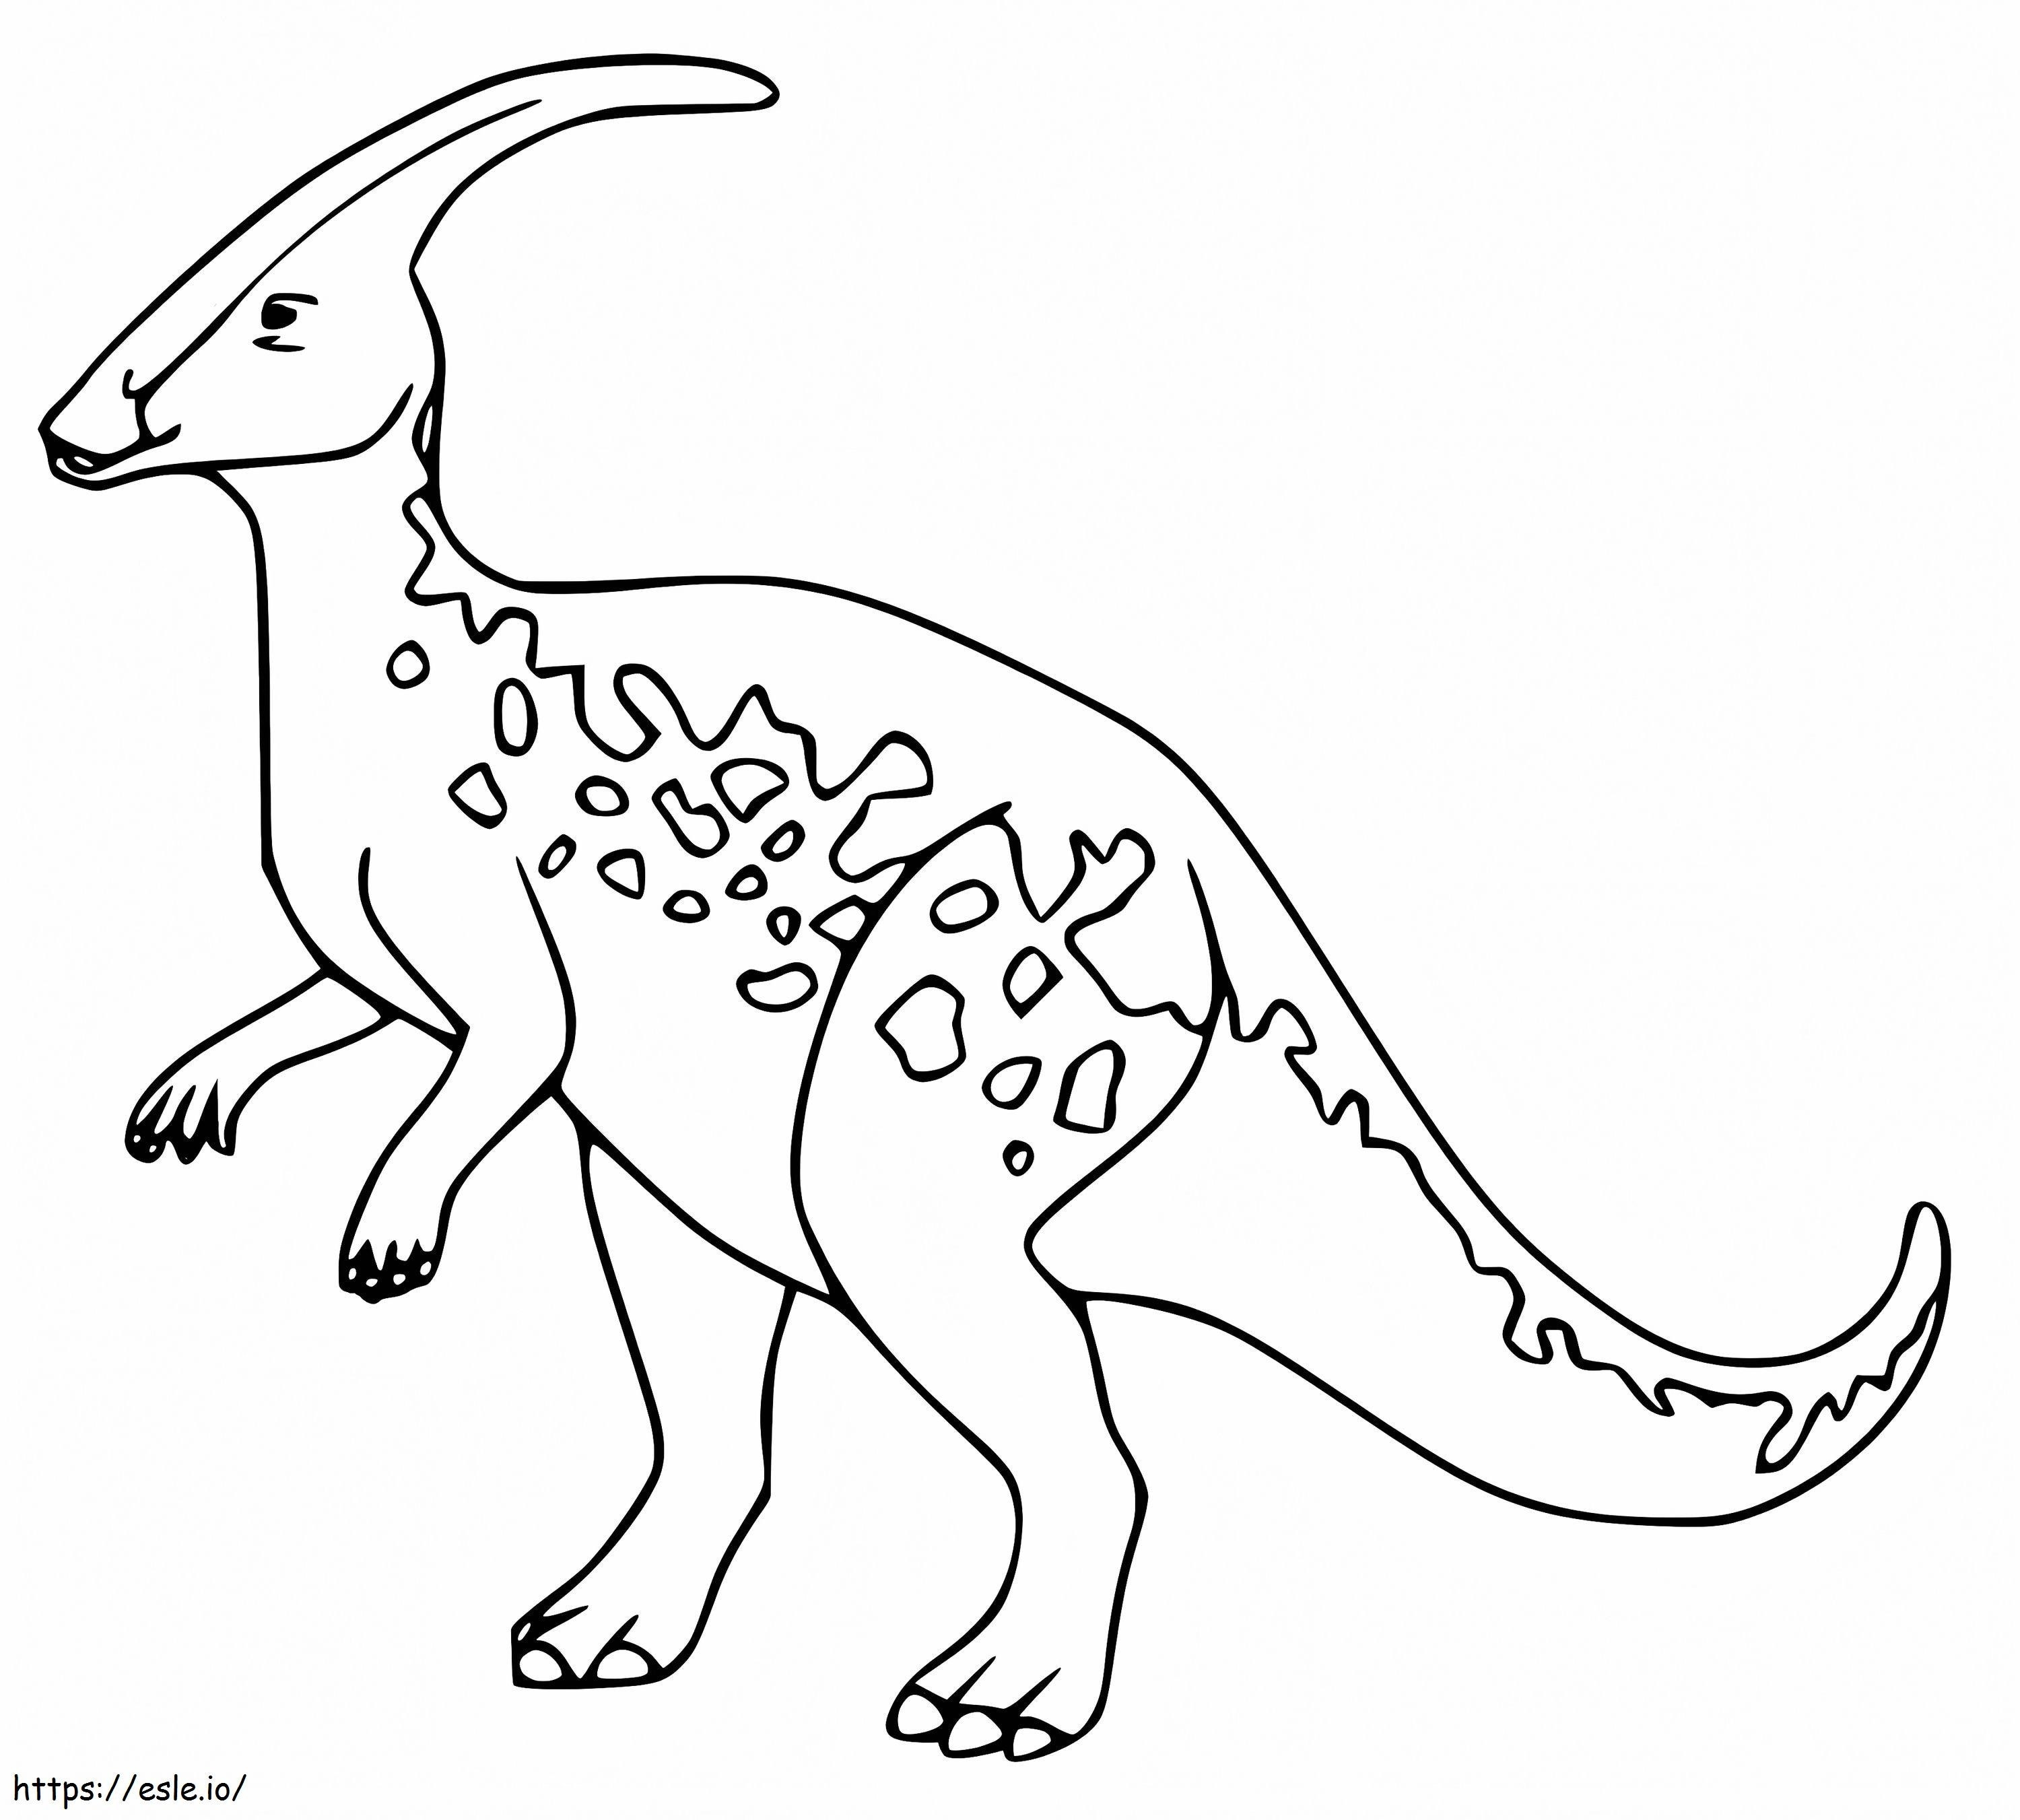 Parasaurolophus 4 coloring page